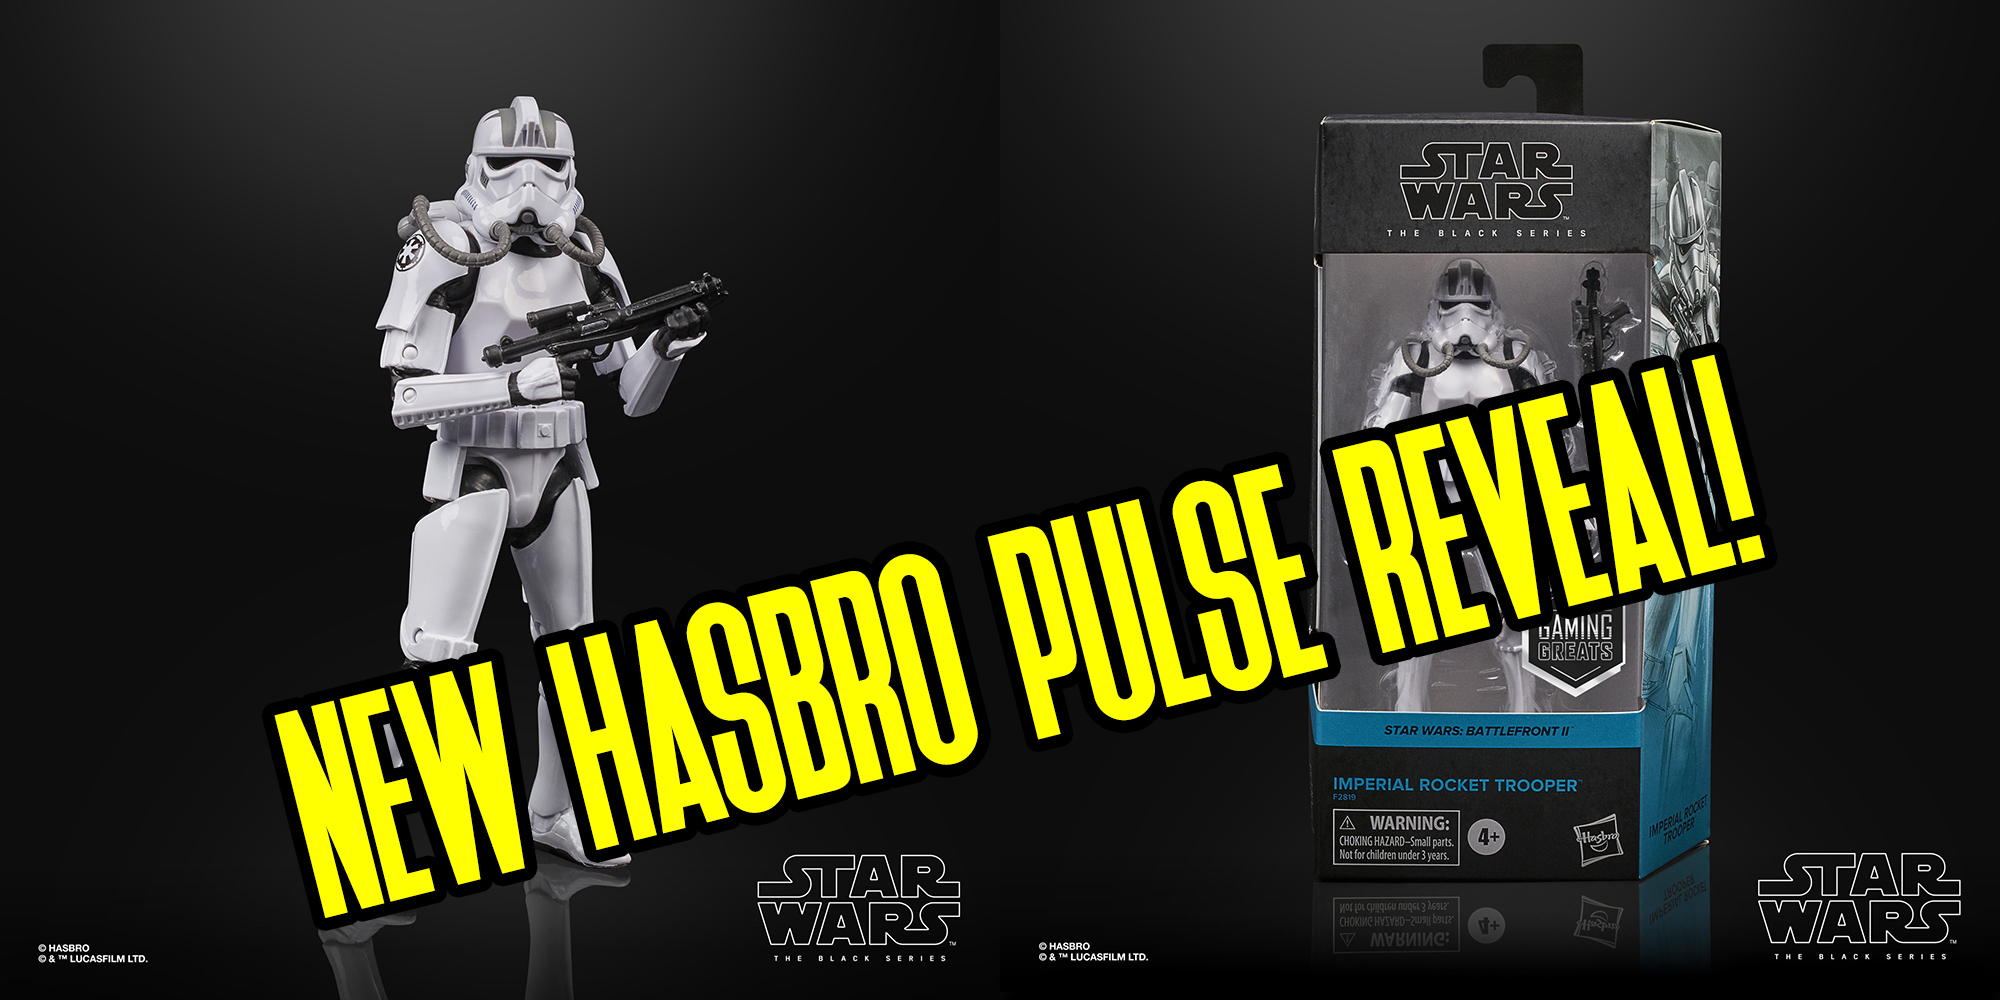 Hasbro Pulse Reveals A 6" Black Series Imperial Rocket Trooper!